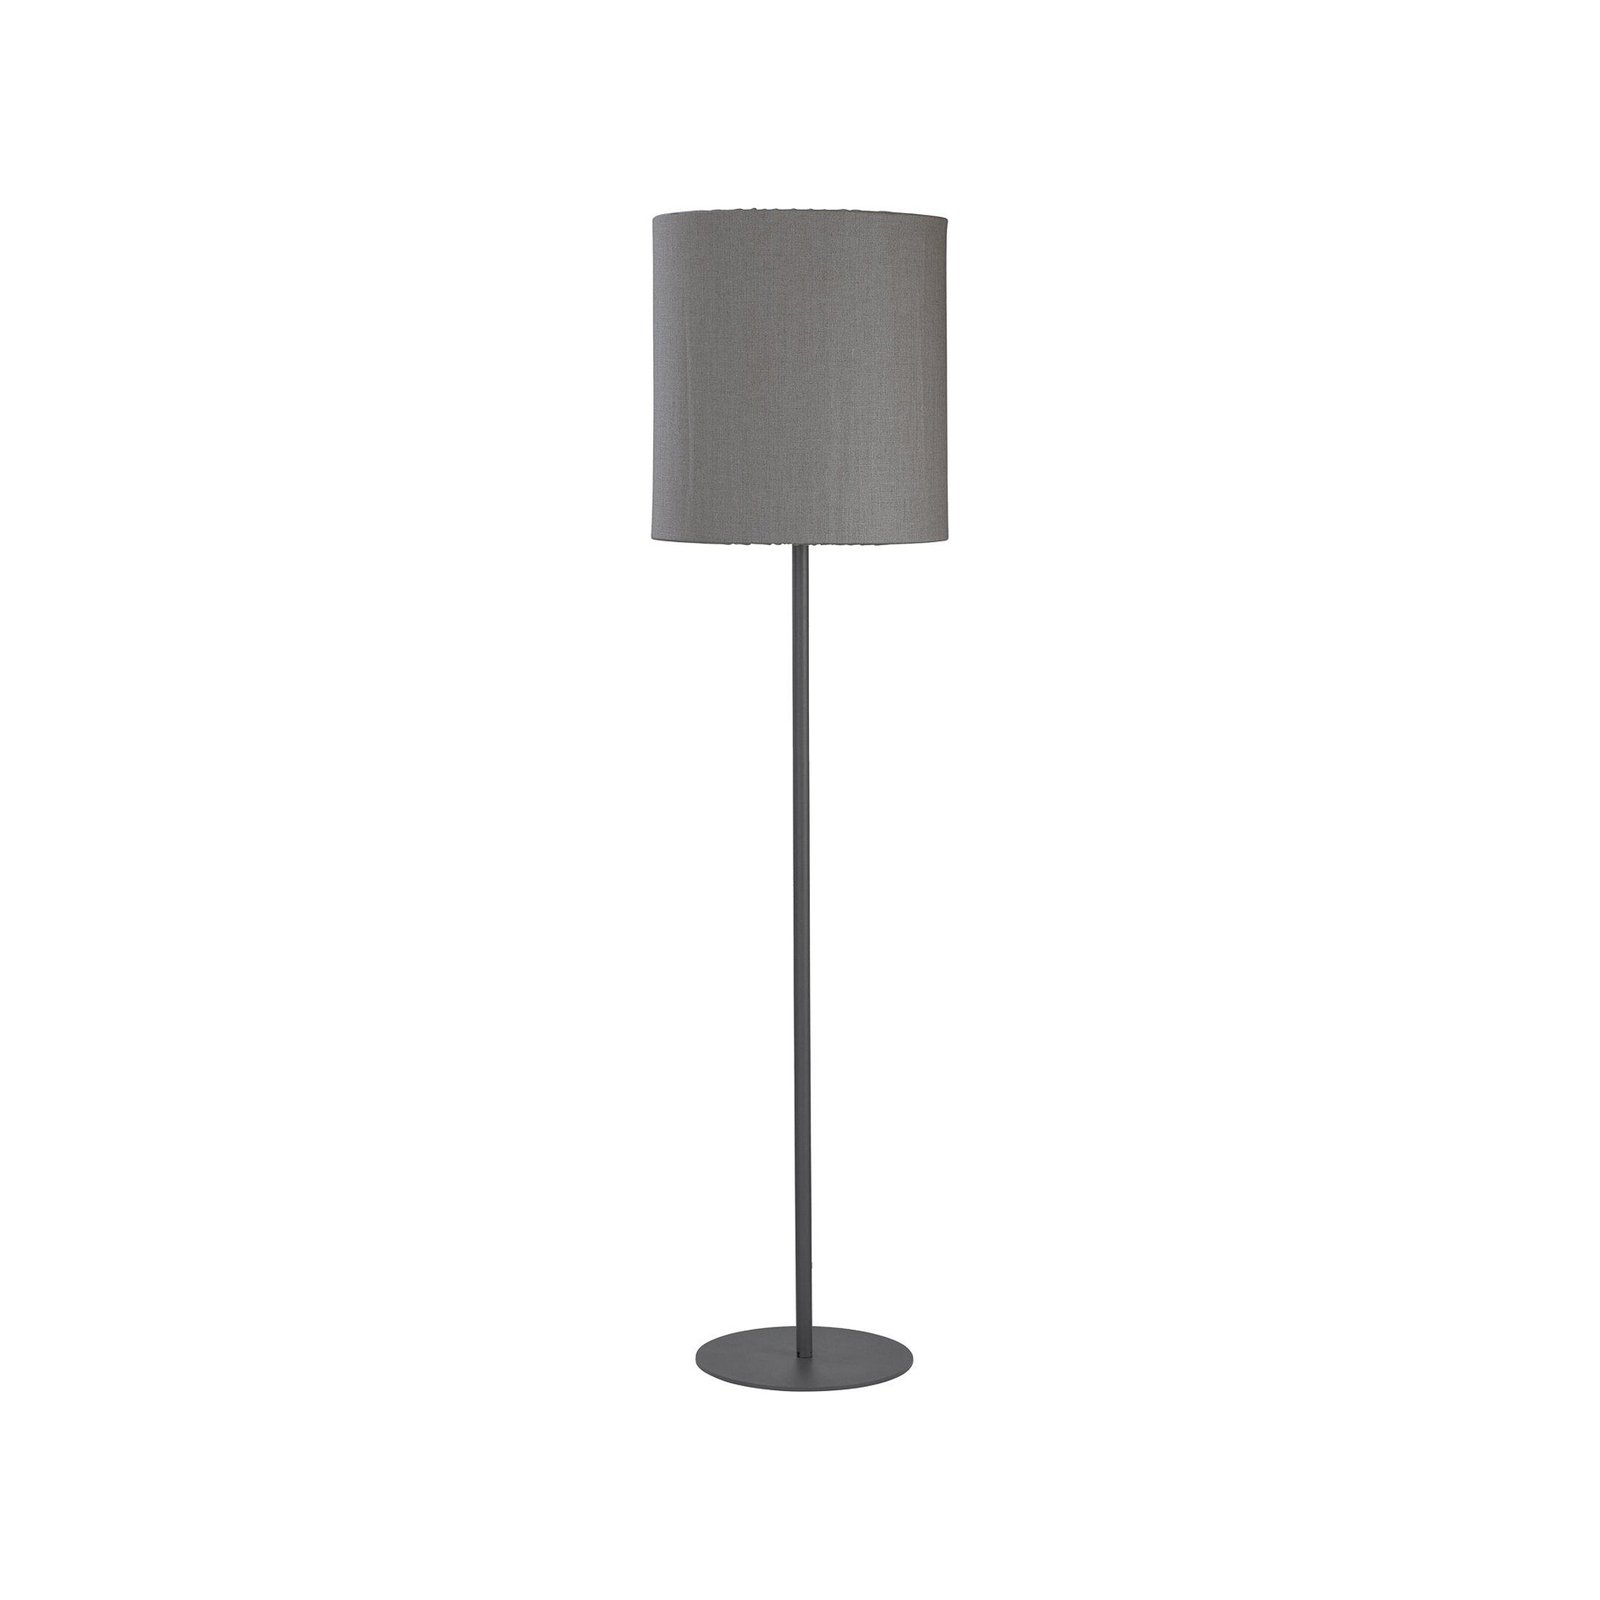 PR Home venkovní stojací lampa Agnar, tmavě šedá/hnědá, 156 cm